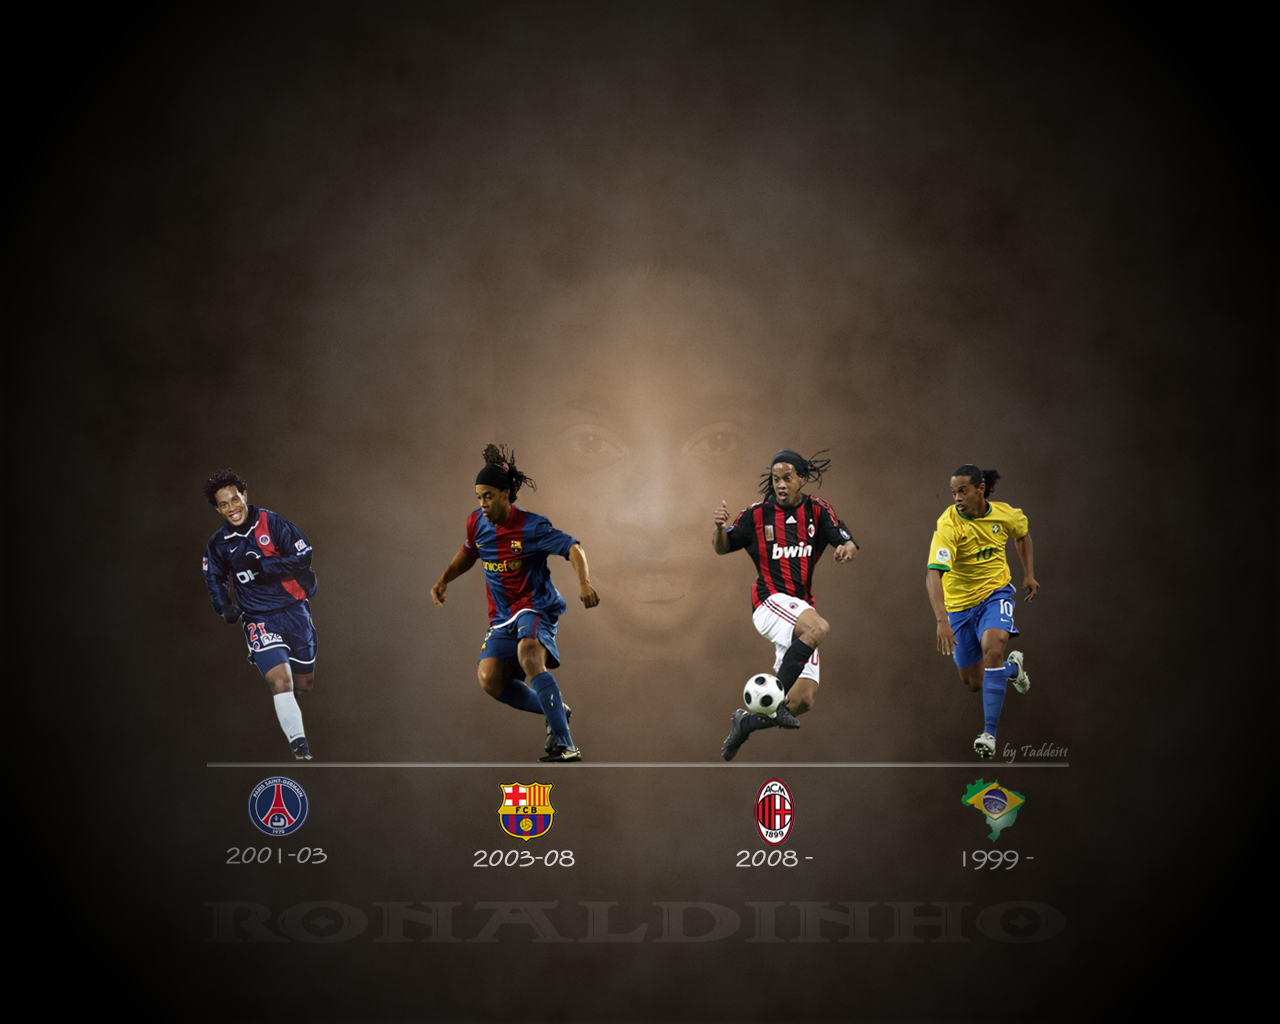 Ronaldinho Best Free Kick Takers in Football (Soccer) | Football ...